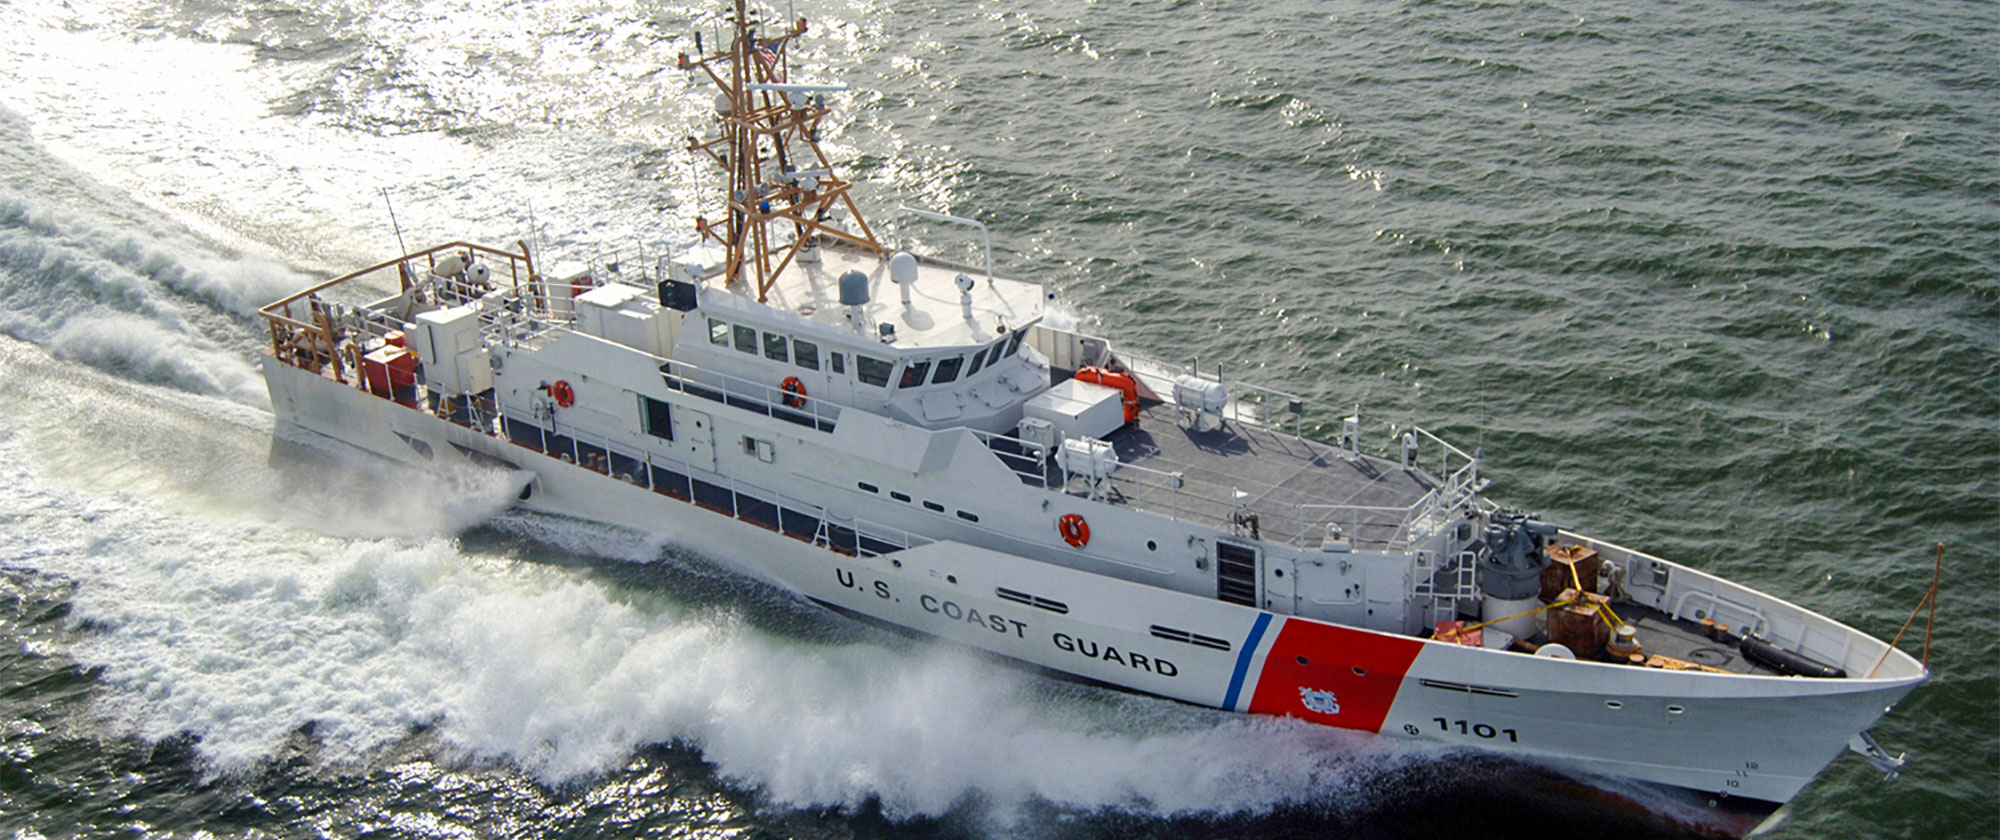 US Coast Guard vessel